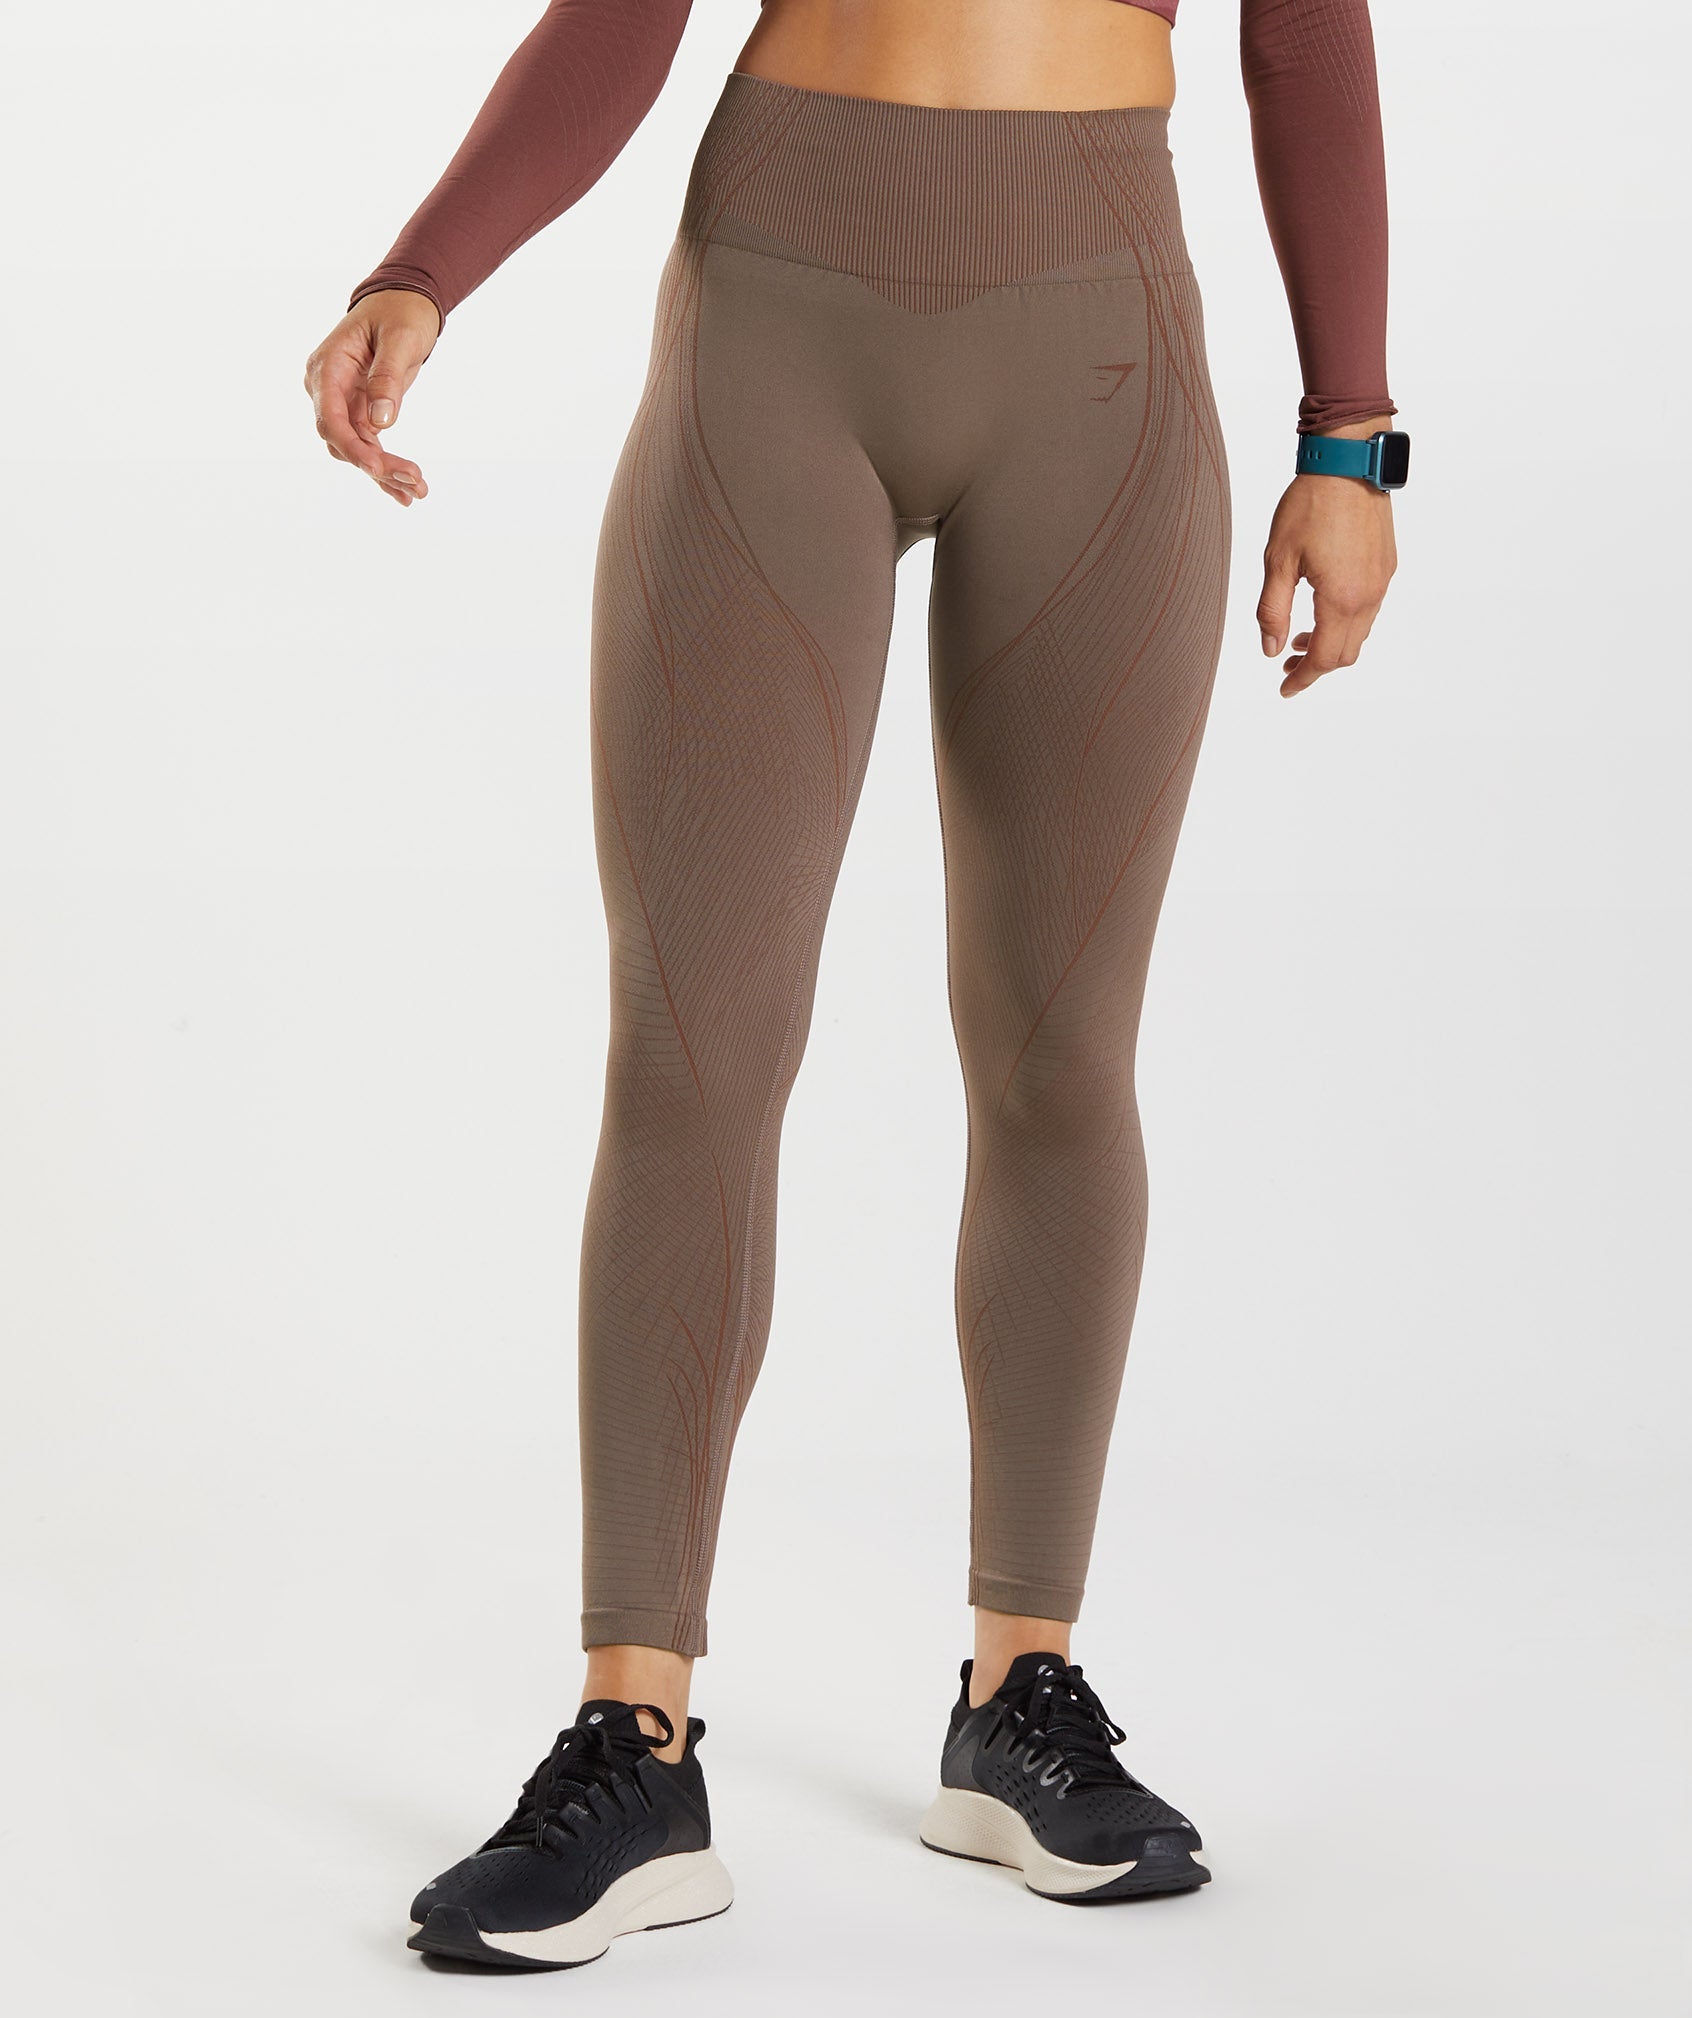 Women's High Waisted Yoga Leggings Workout Pants - Brown / S